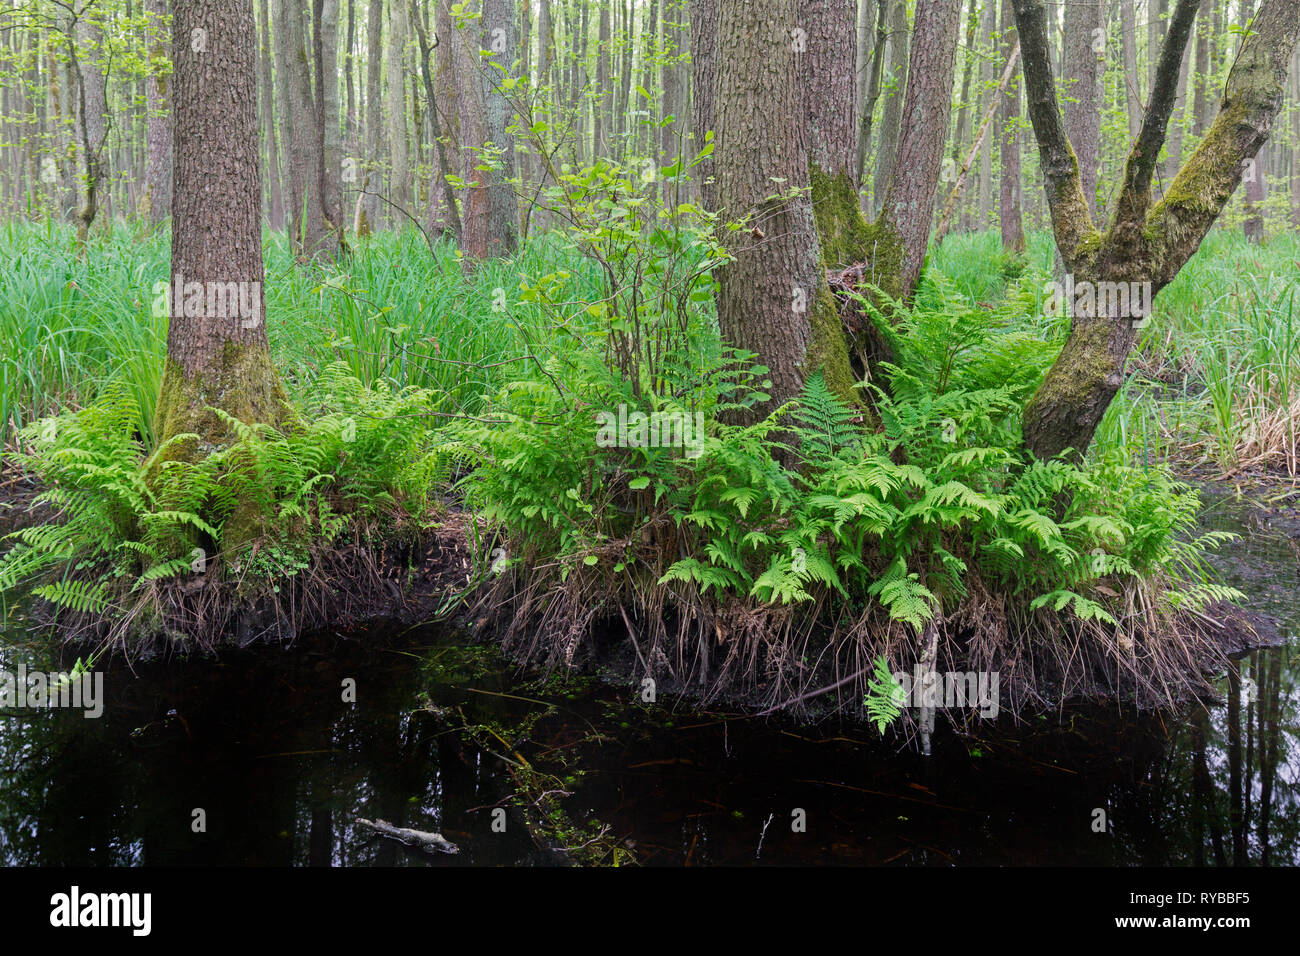 Alder carr showing European alder / black alder trees (Alnus glutinosa) in spring, Saxony-Anhalt, Germany Stock Photo